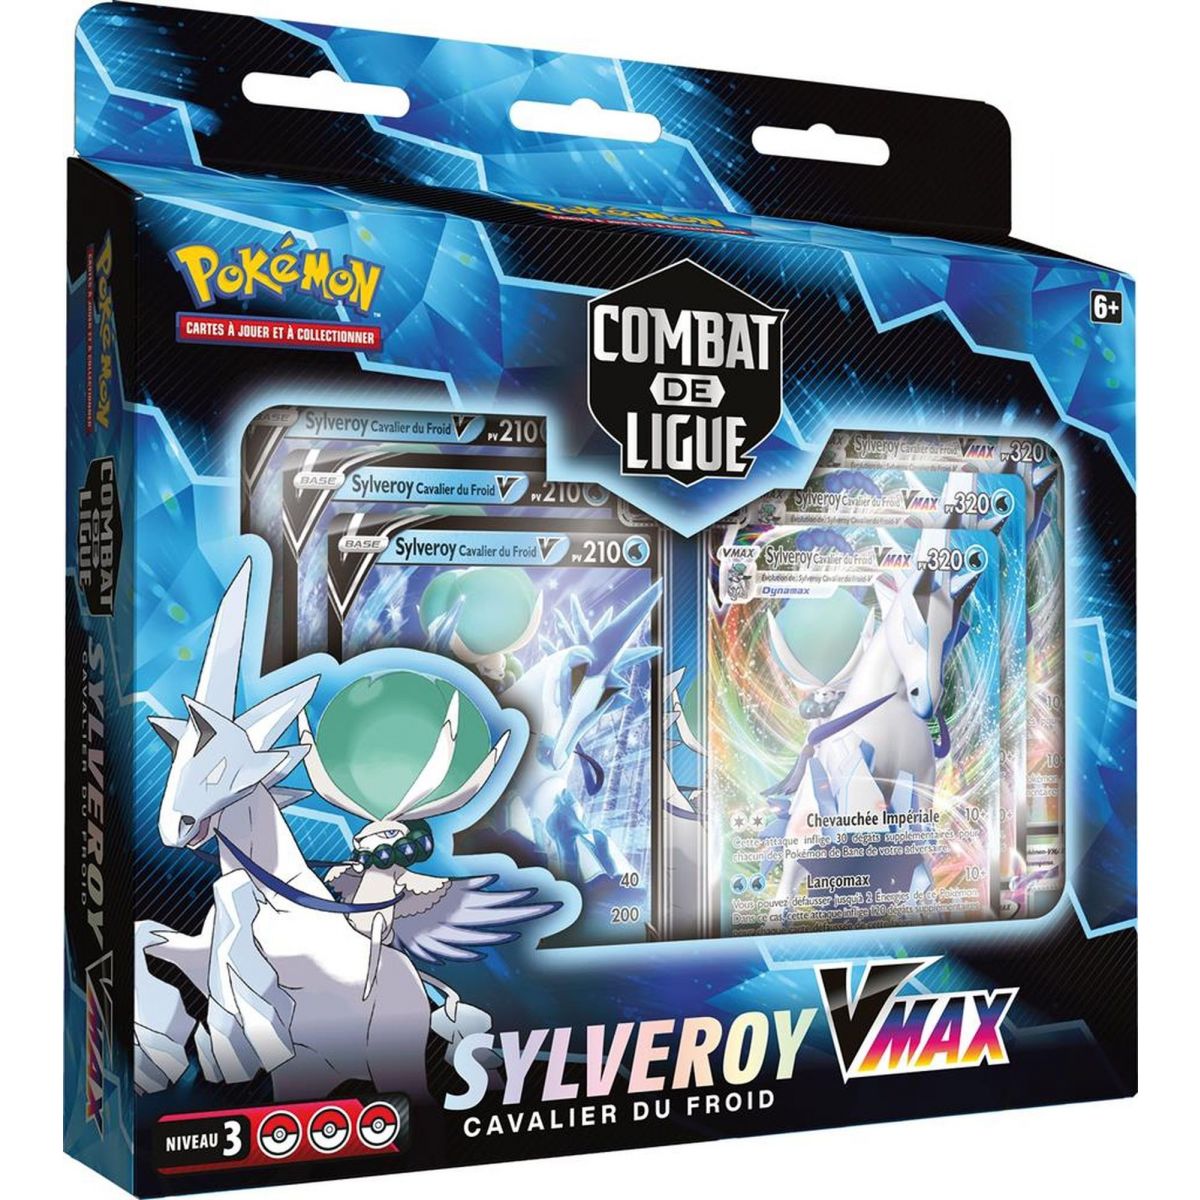 Pokémon - Deck Combat de Ligue - Sylveroy Cavalier du Froid VMAX